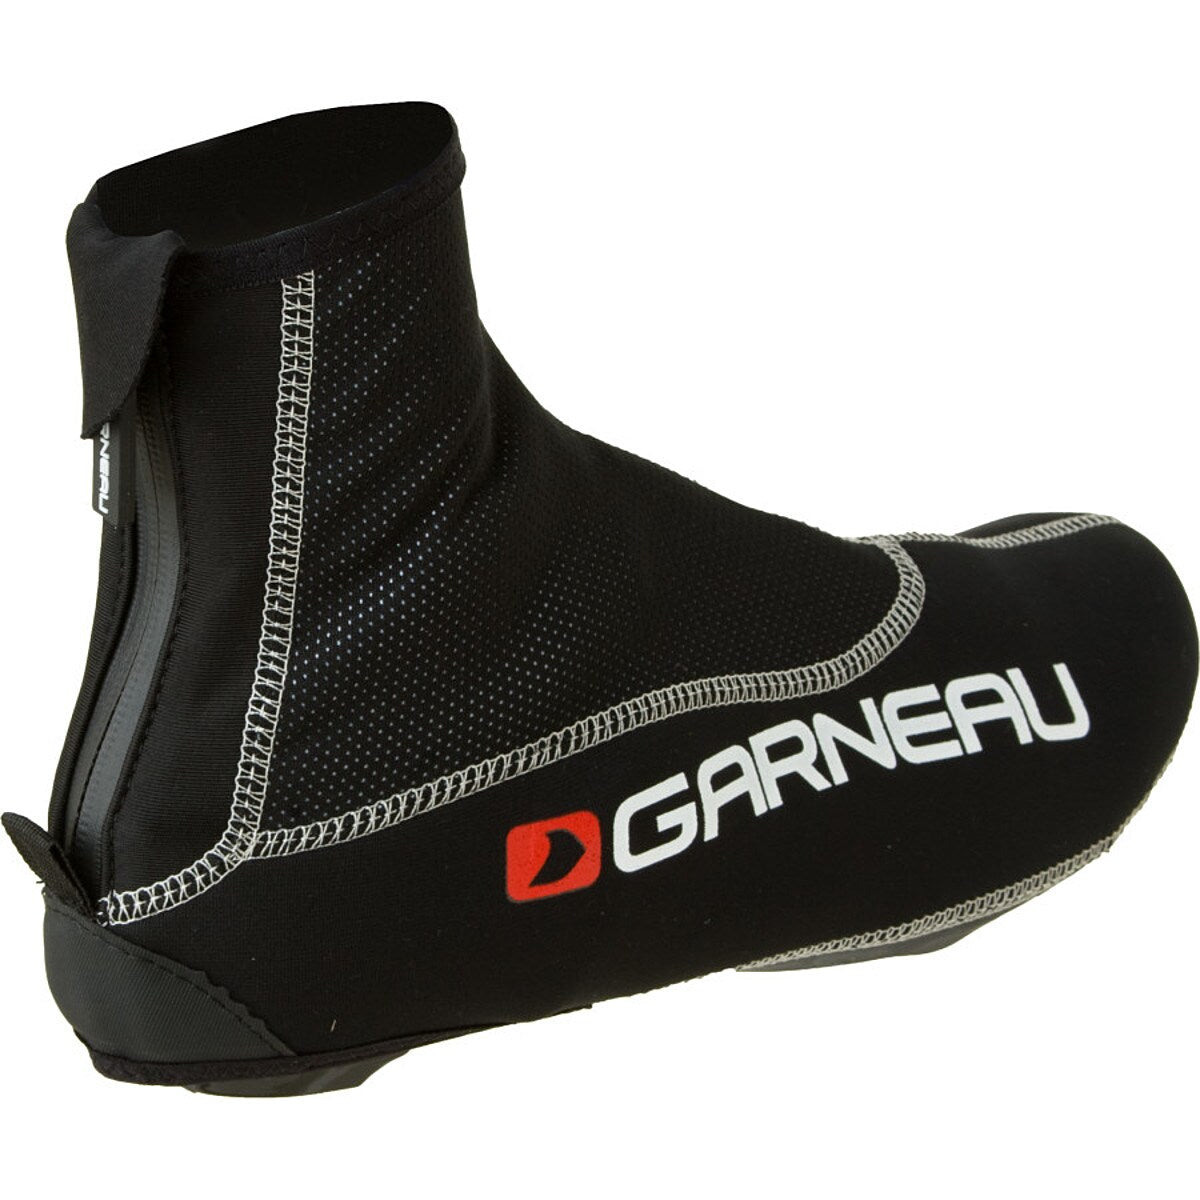 Louis Garneau XTR2 Cold Weather Shoe Covers Cycling Black XS